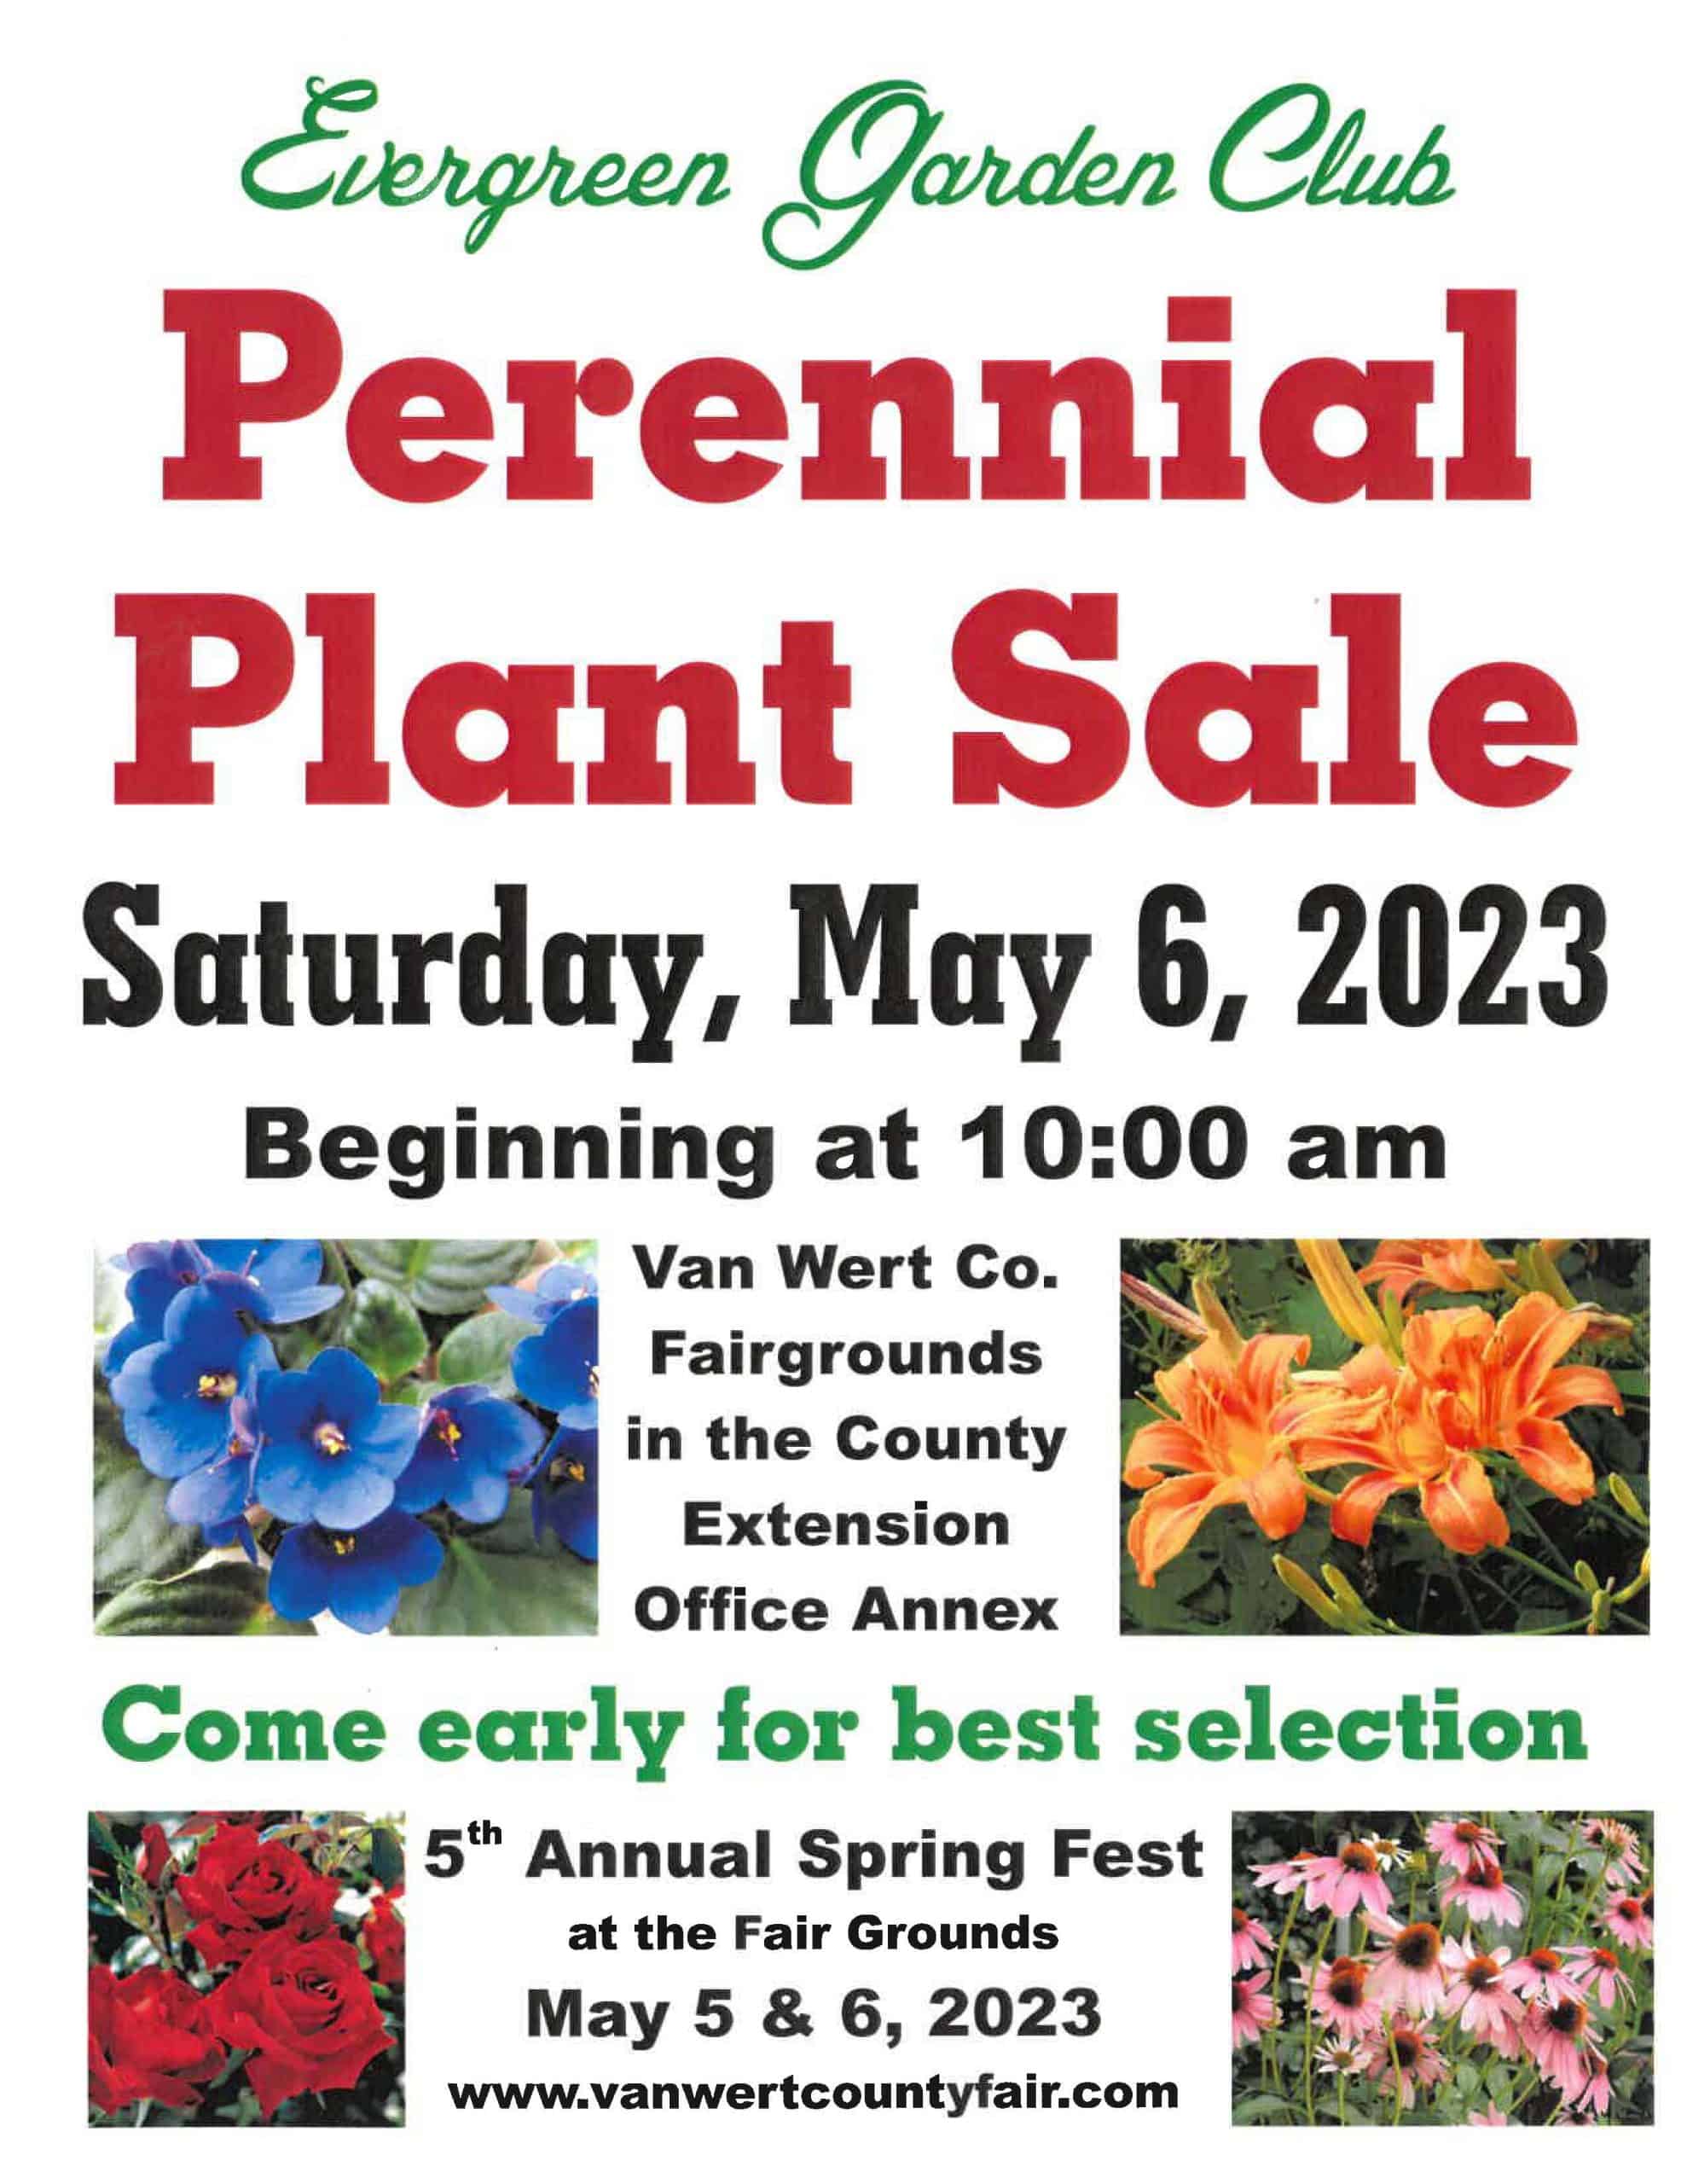 Evergreen Garden Club Perennial Plant Sale